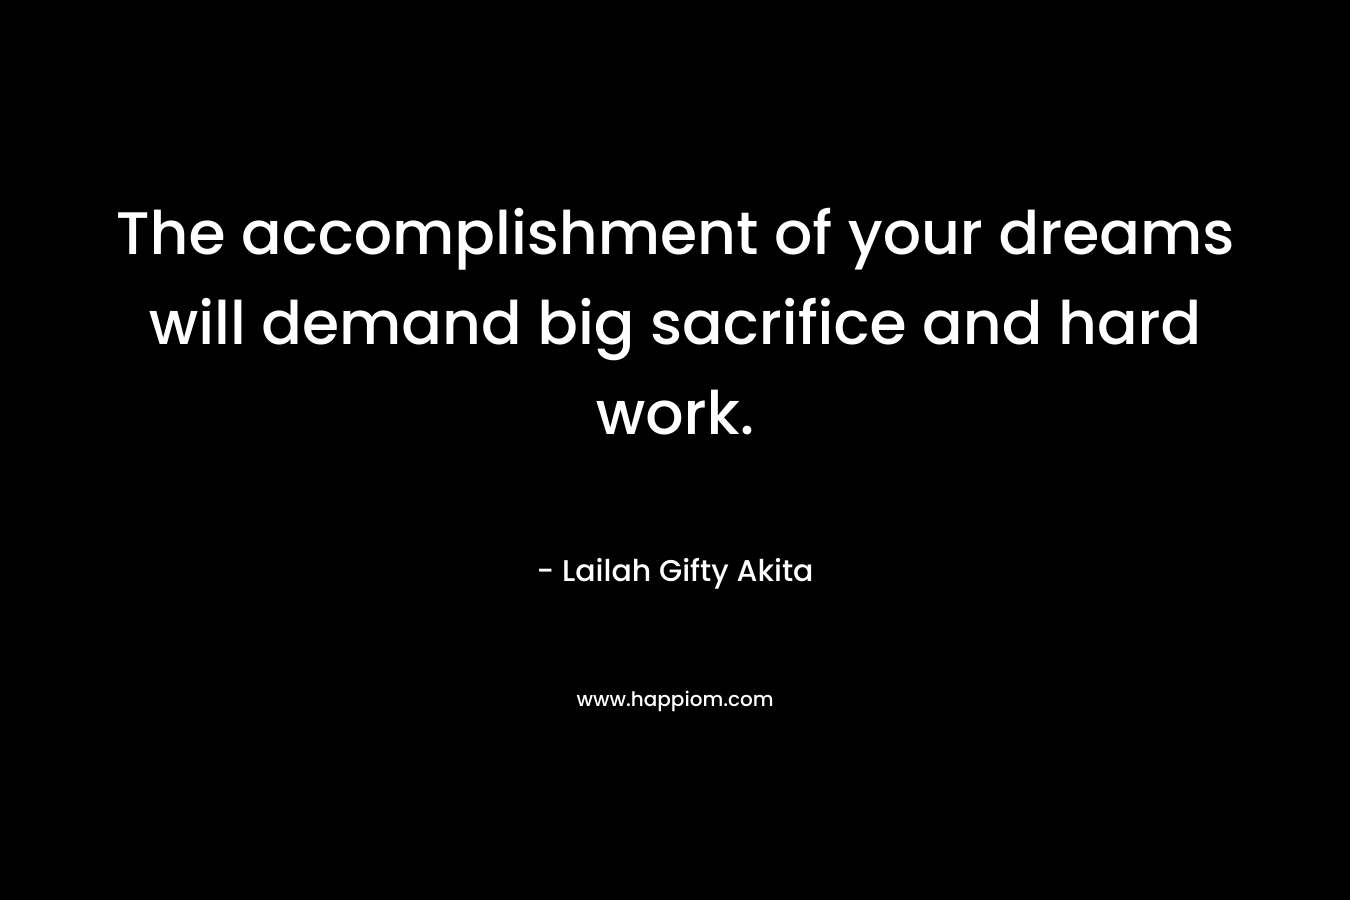 The accomplishment of your dreams will demand big sacrifice and hard work.